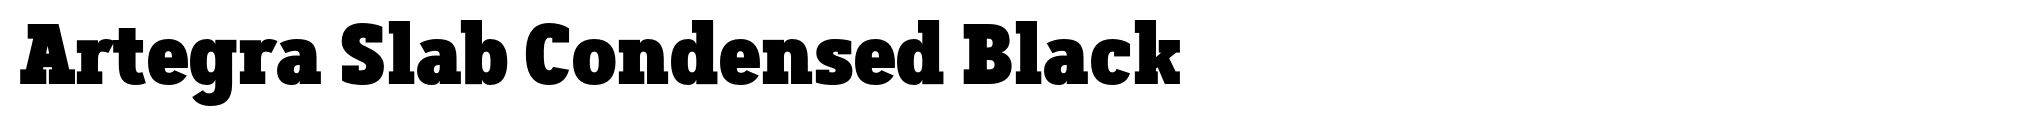 Artegra Slab Condensed Black image